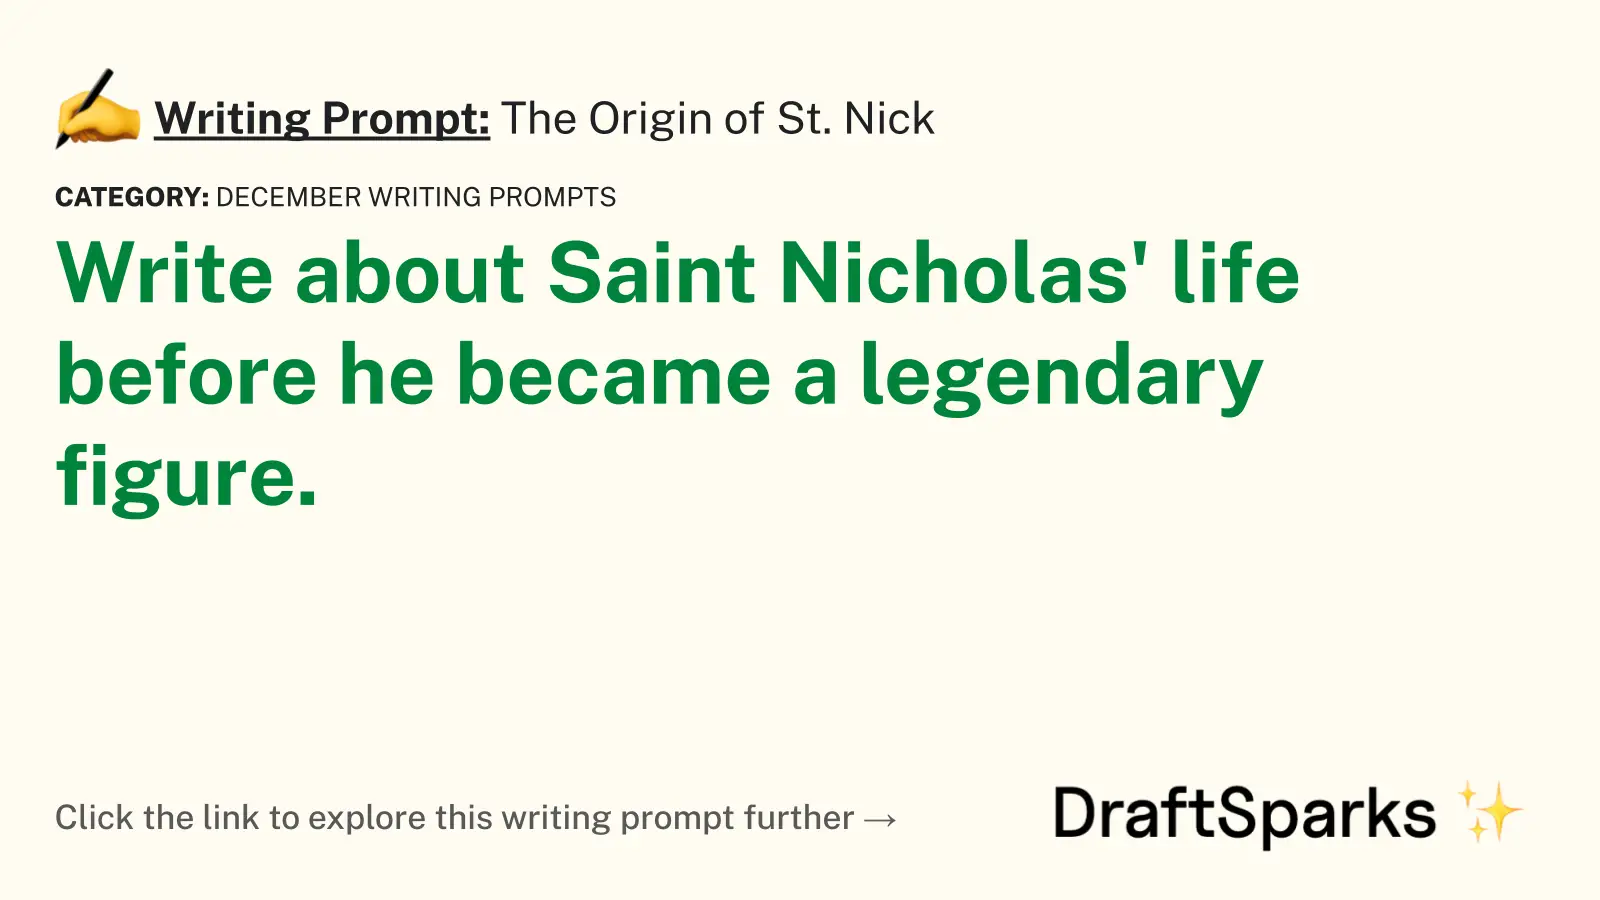 The Origin of St. Nick